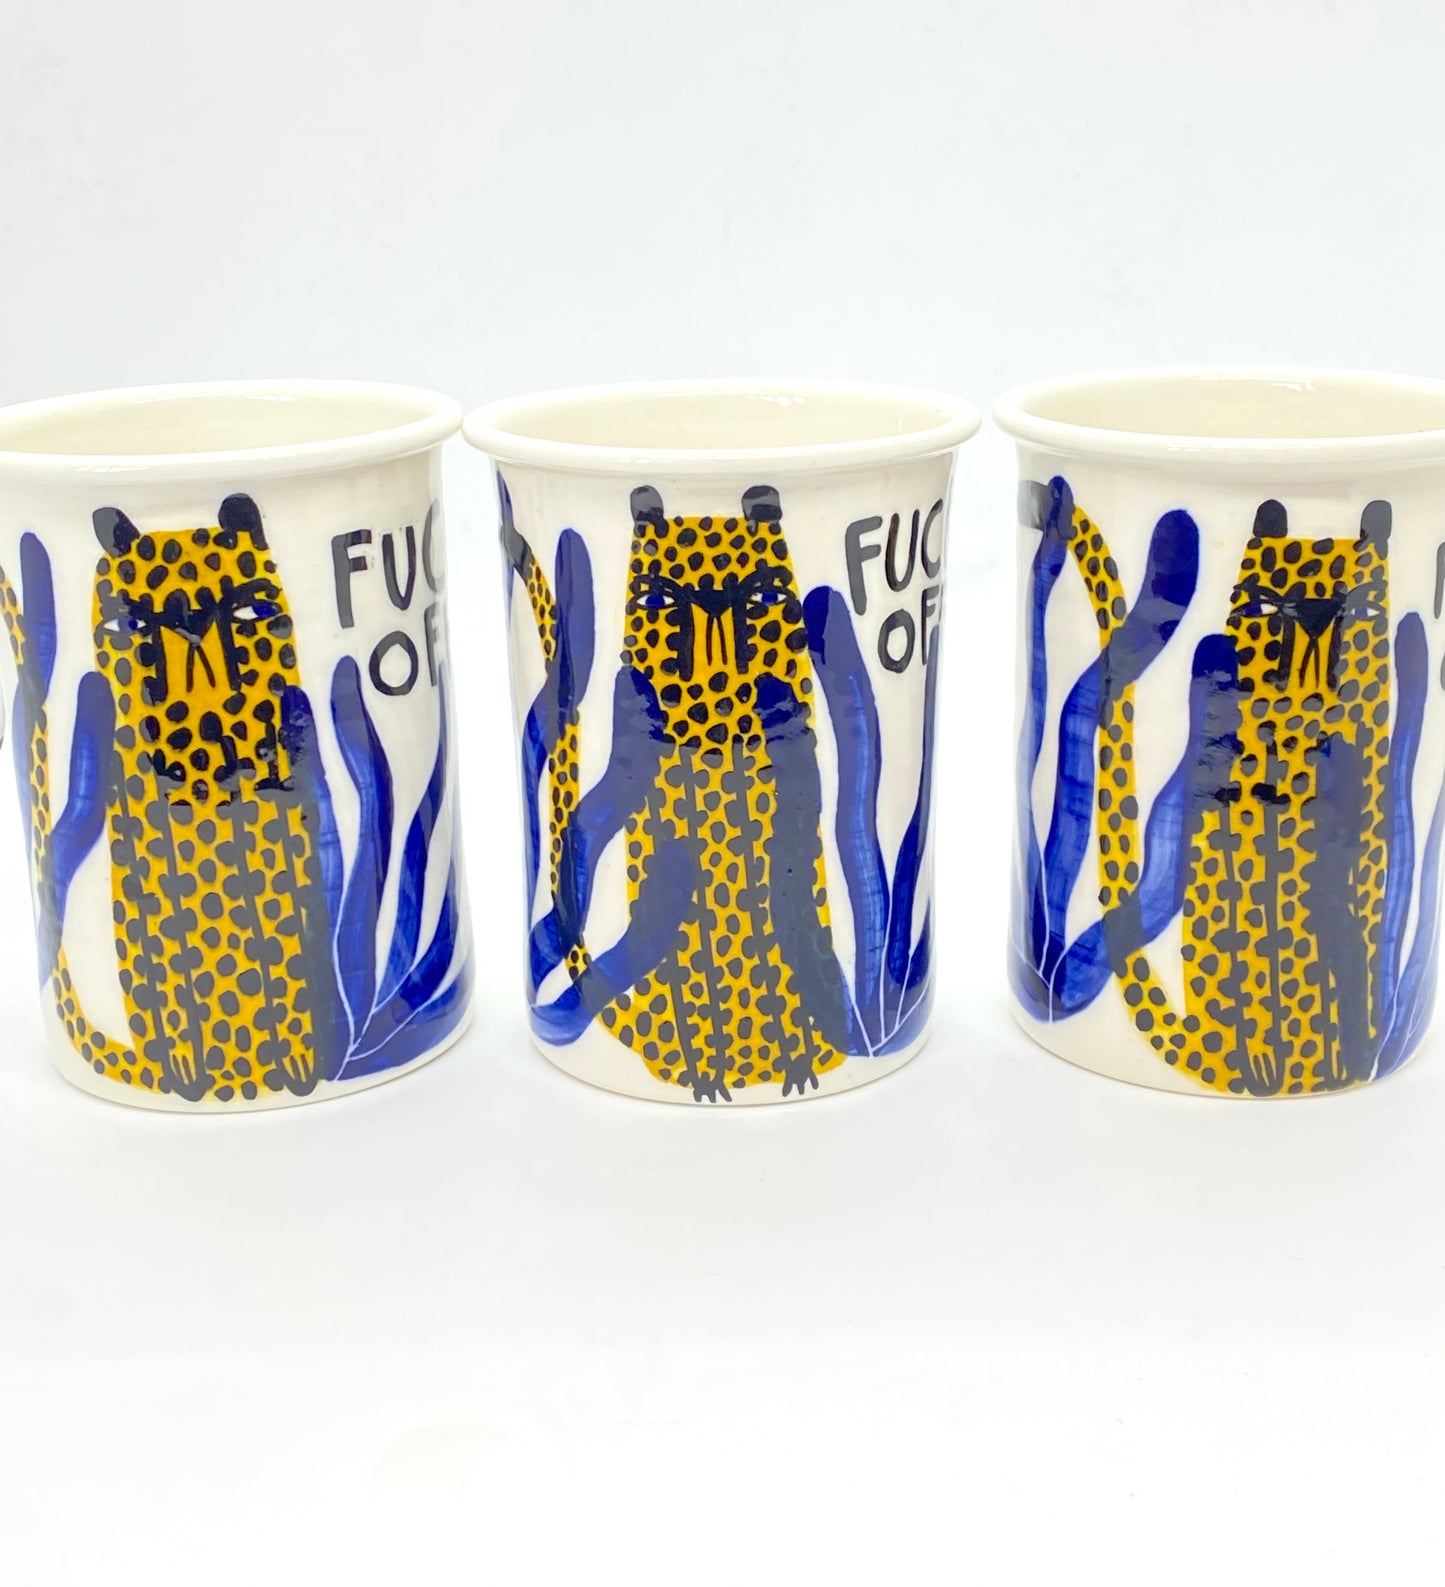 Ceramic Cup by Studio Soph - "FUCK OFF" Yellow Cheetah